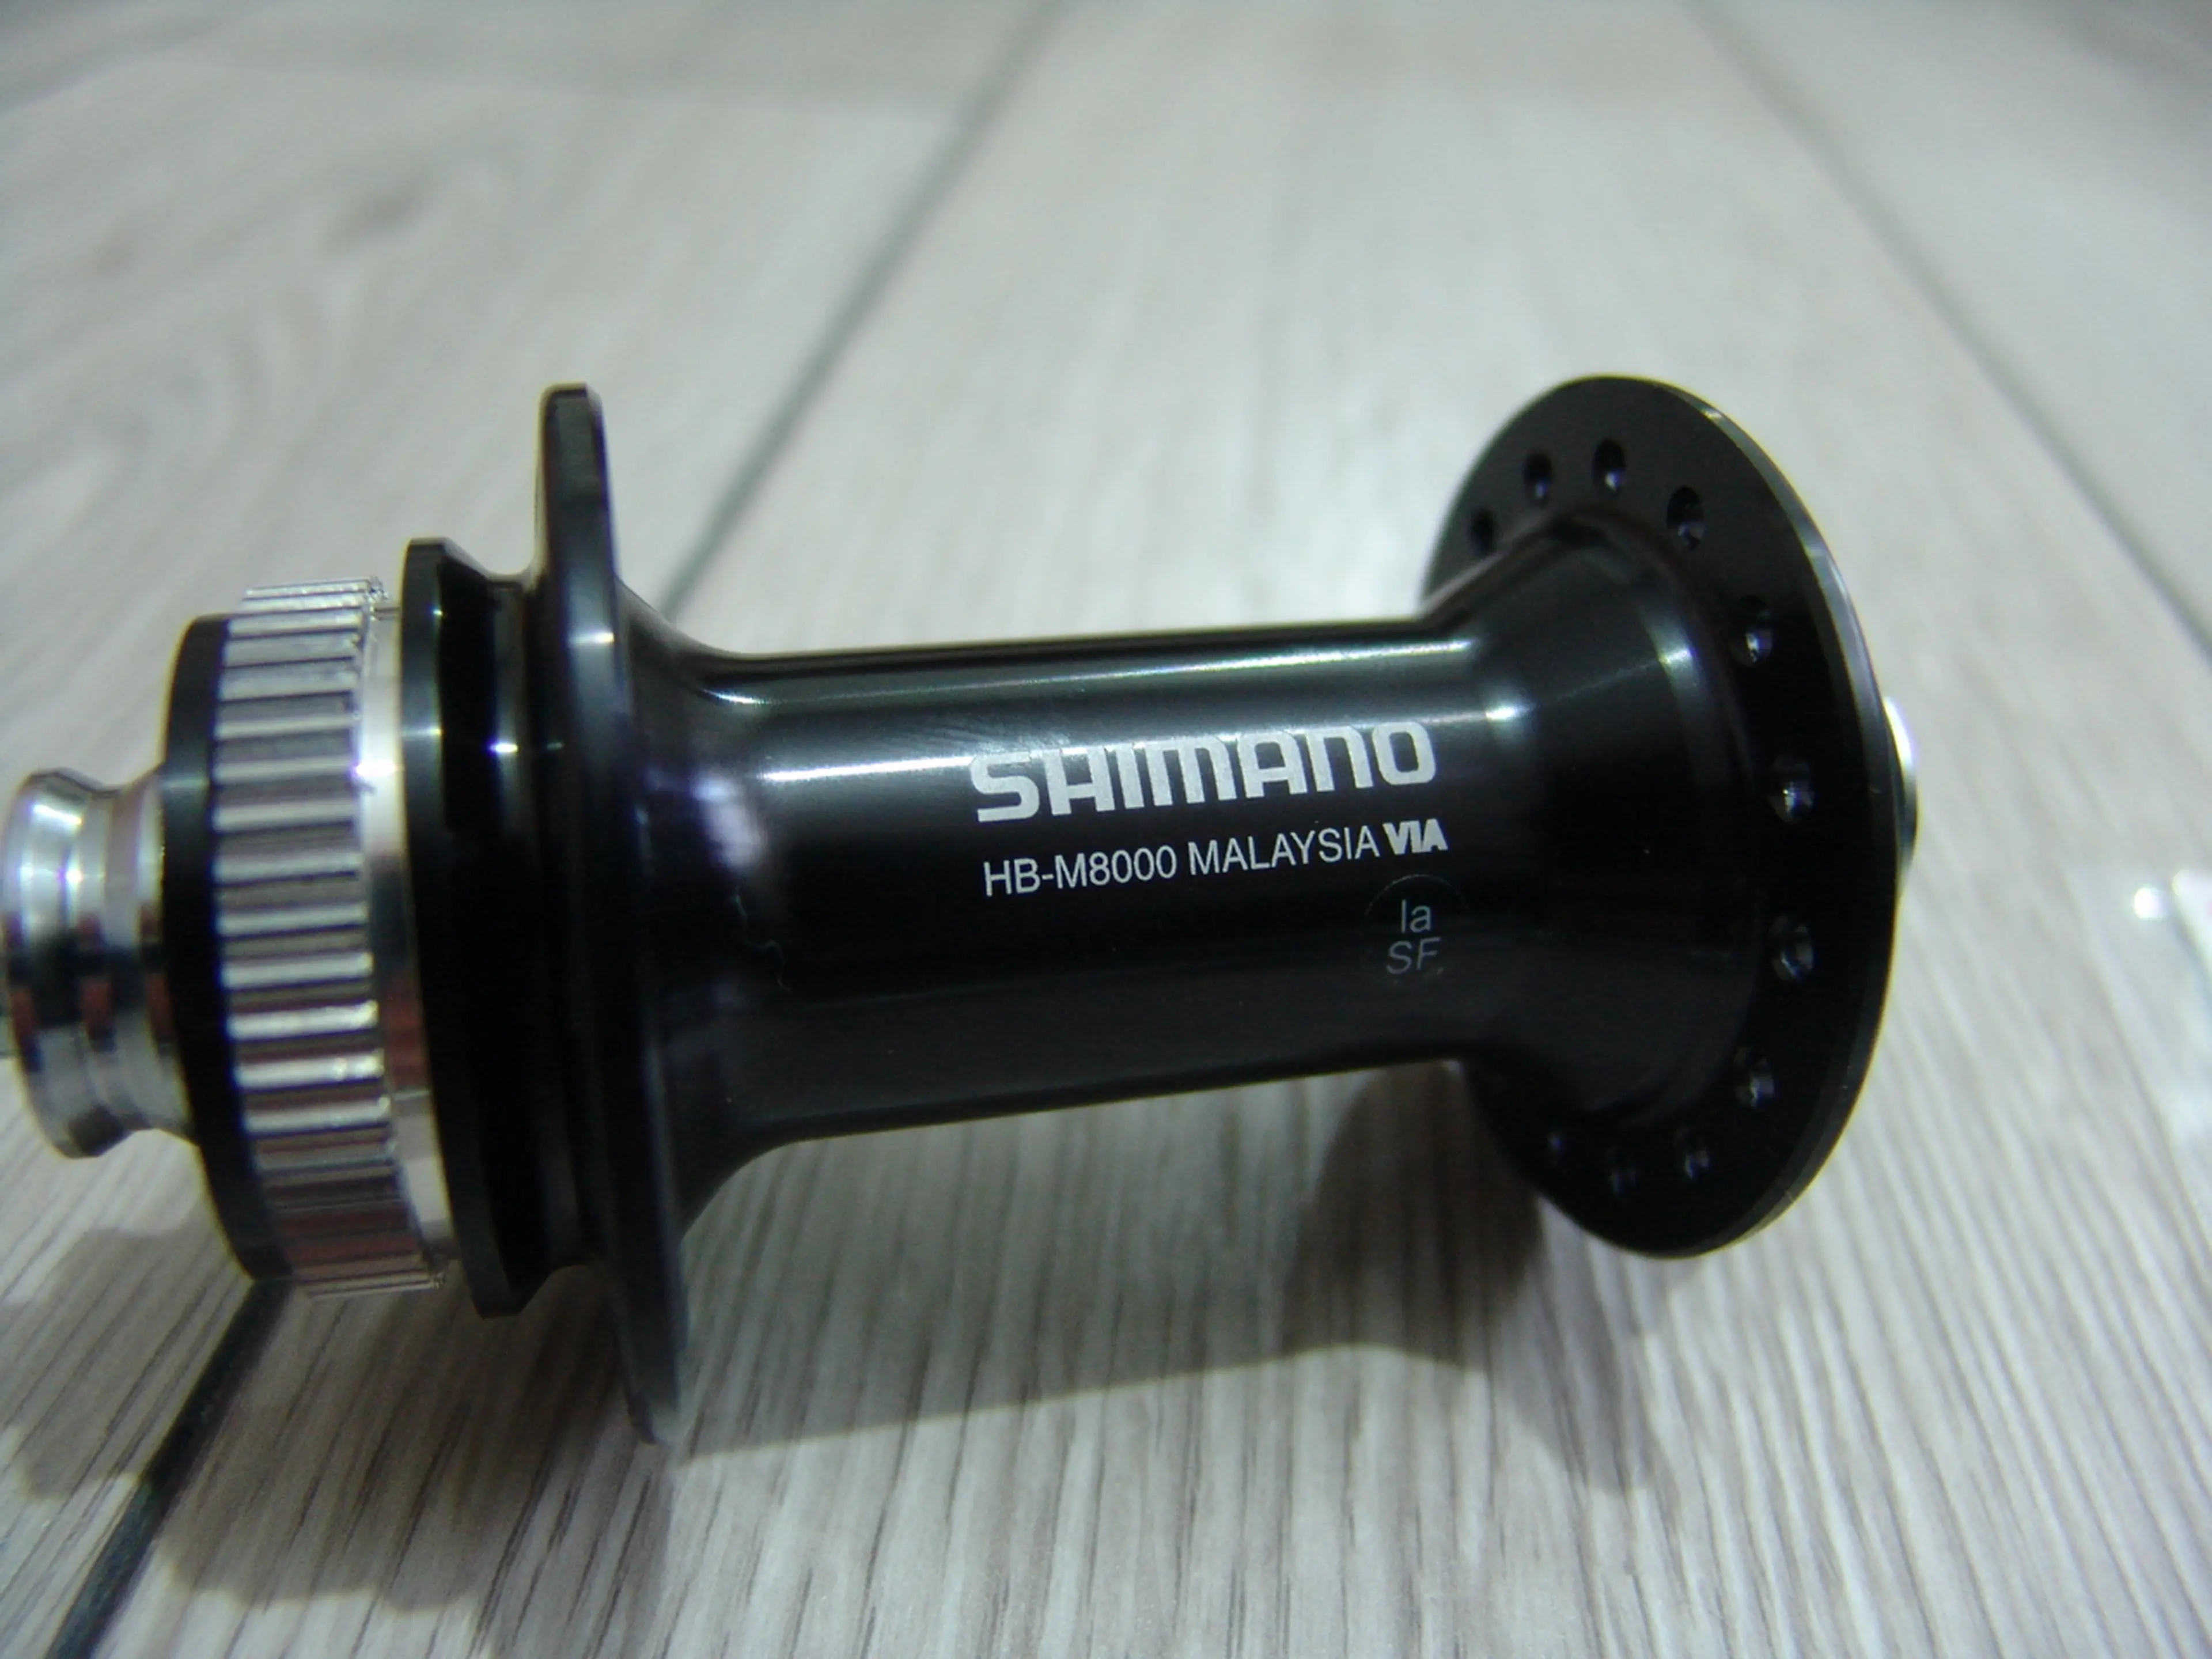 5. Butuc fata Shimano XT M8000 centerlock-32gauri/Nou